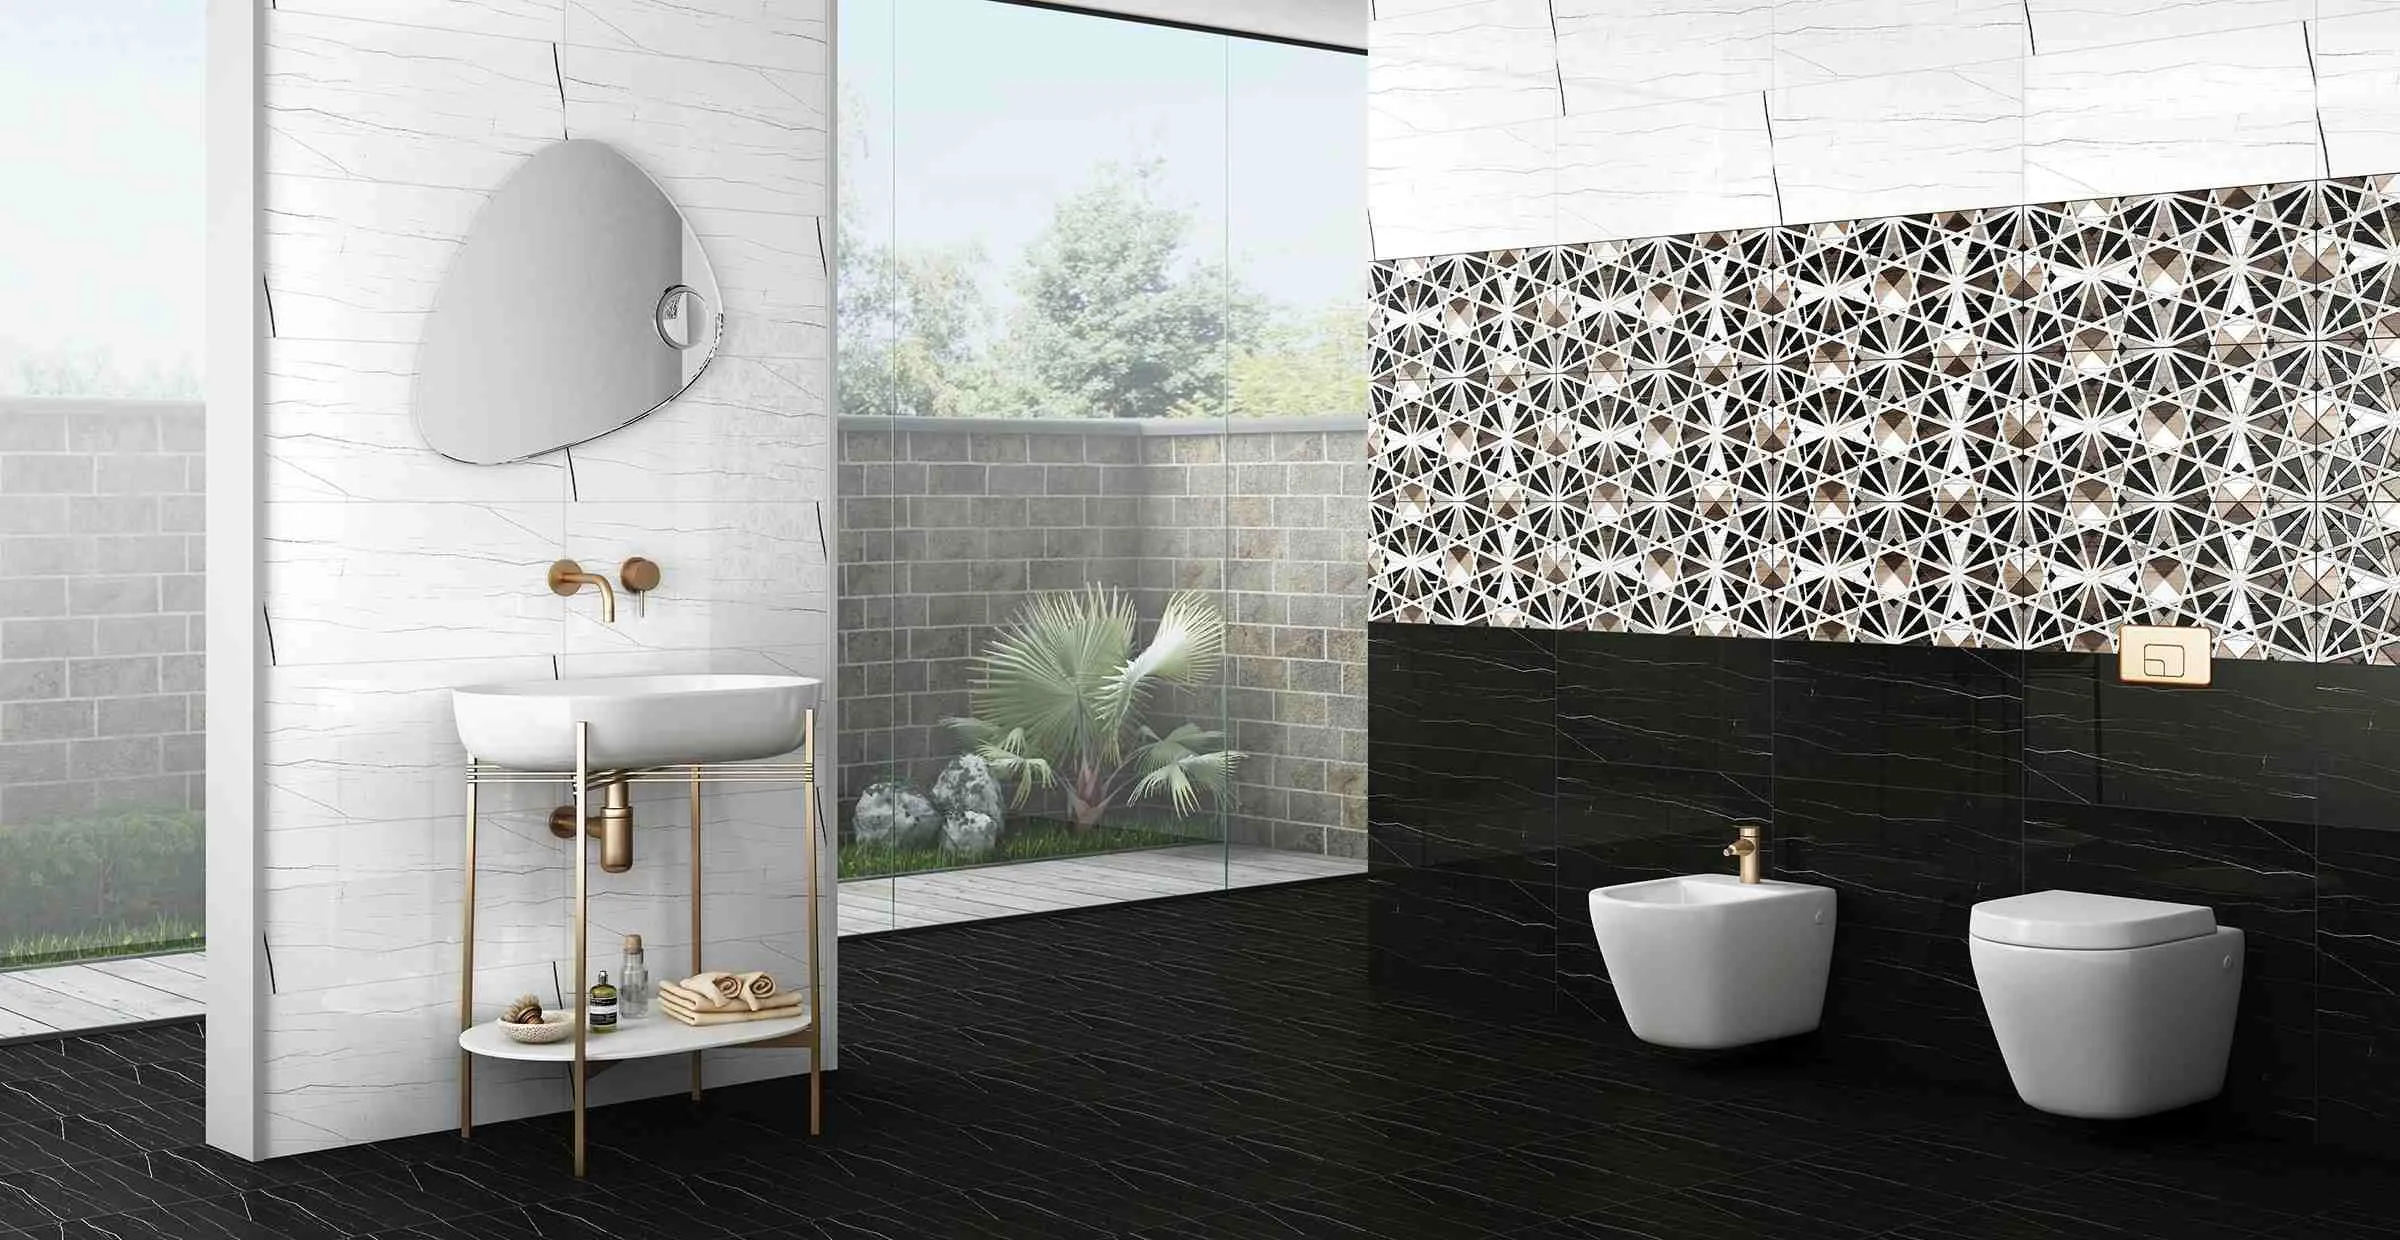 black floor tiles in a bathroom with mirror, toilet, washbasin